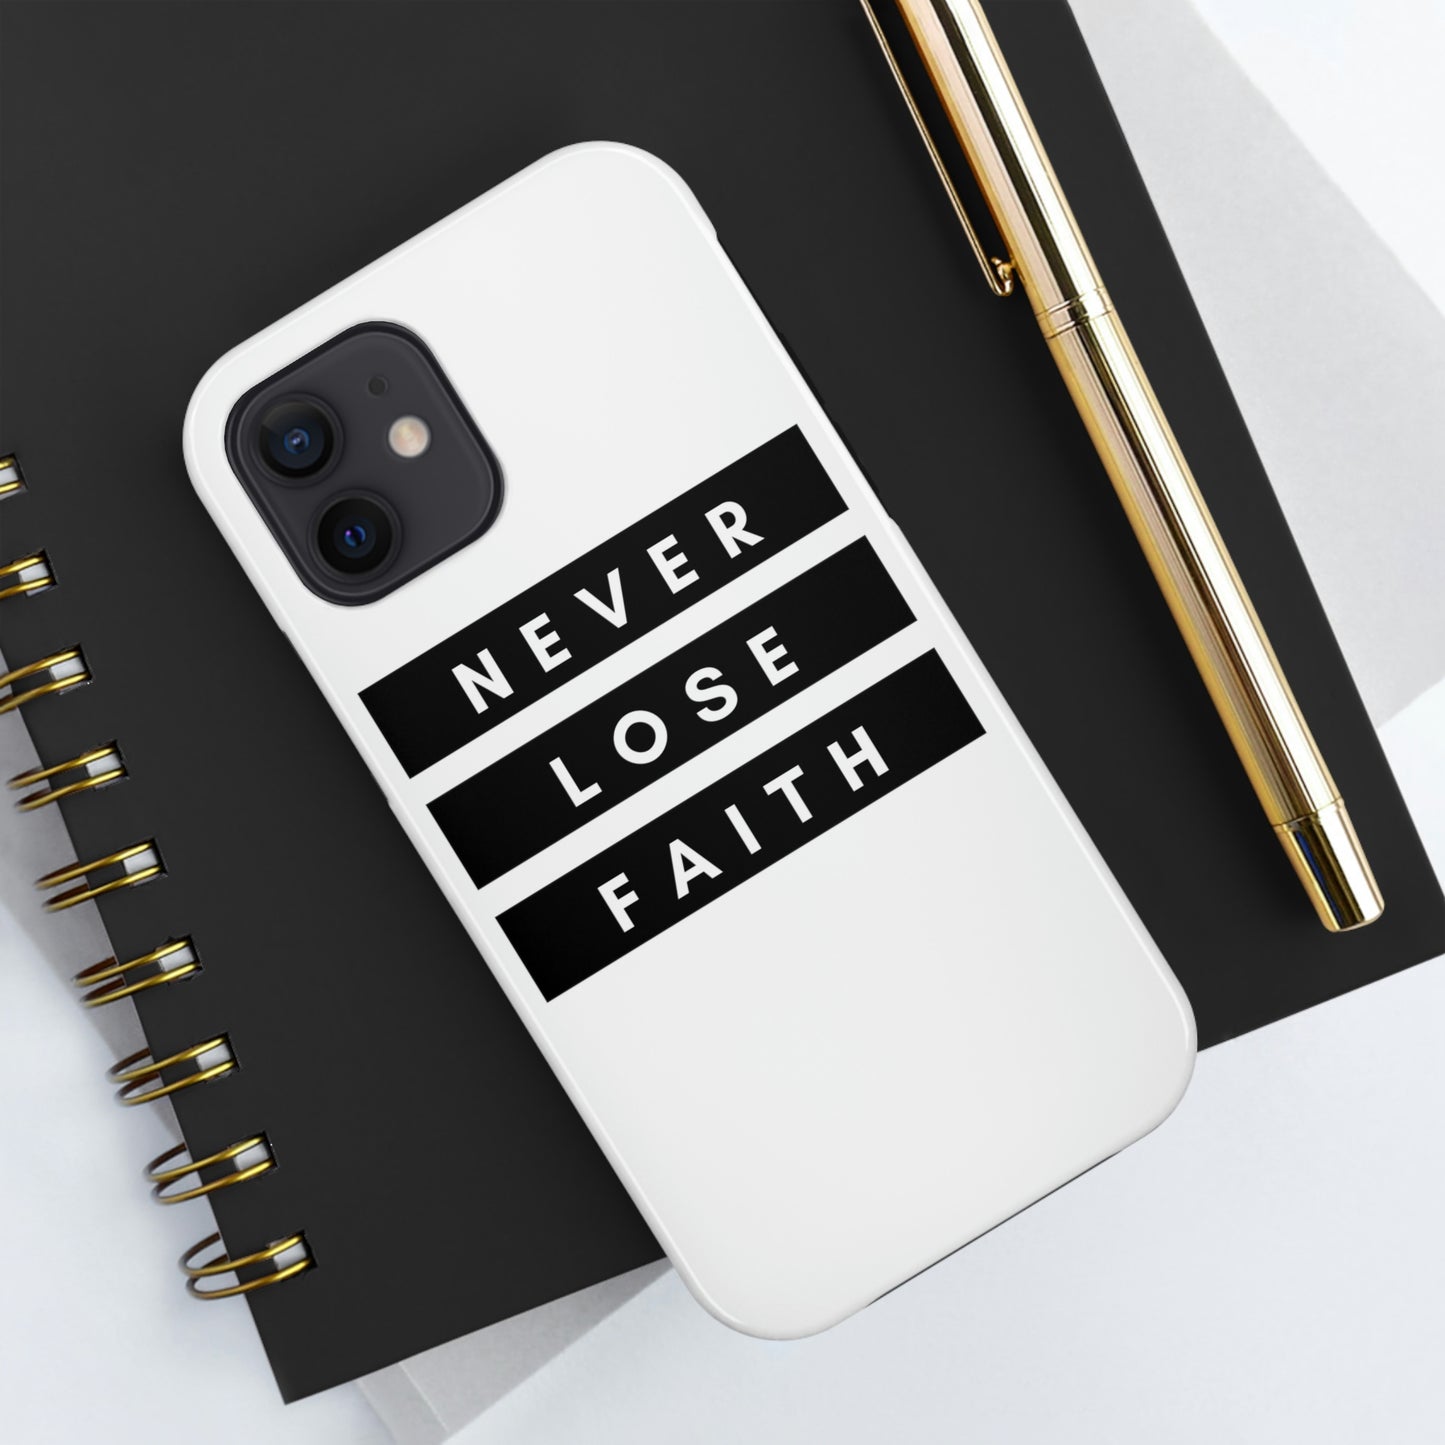 Never Lose Faith iPhone Case - White